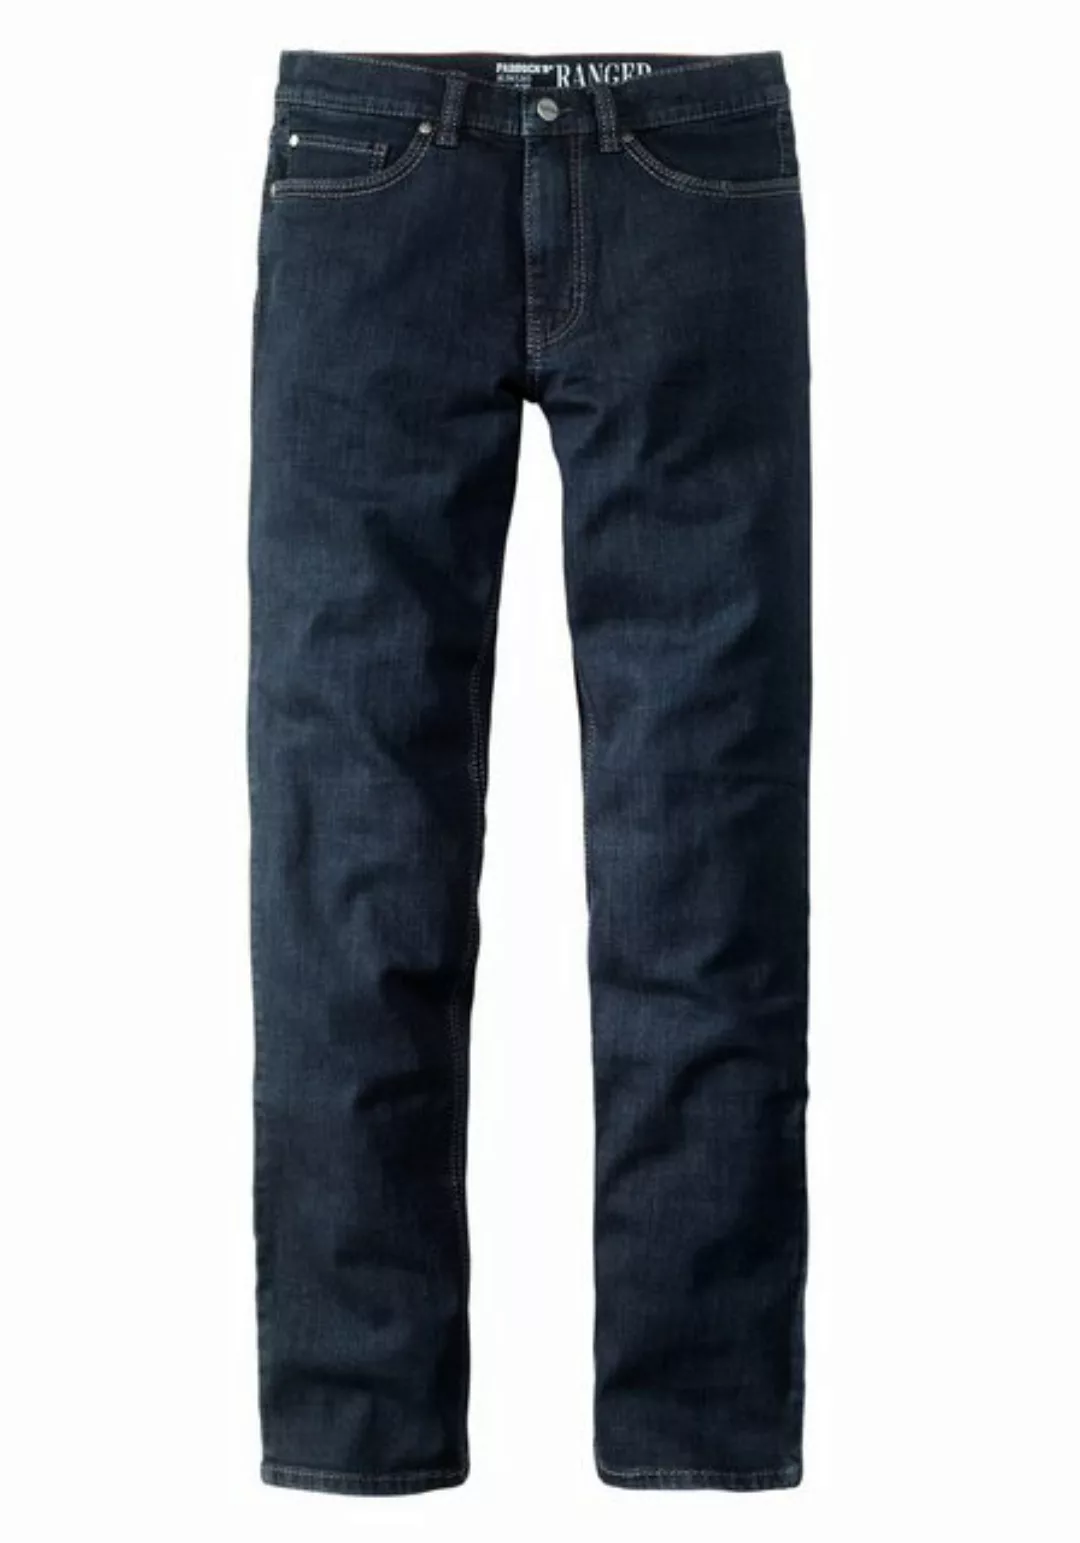 Paddock's 5-Pocket-Jeans PADDOCKS RANGER Saddle Stitch blue black 80094 326 günstig online kaufen